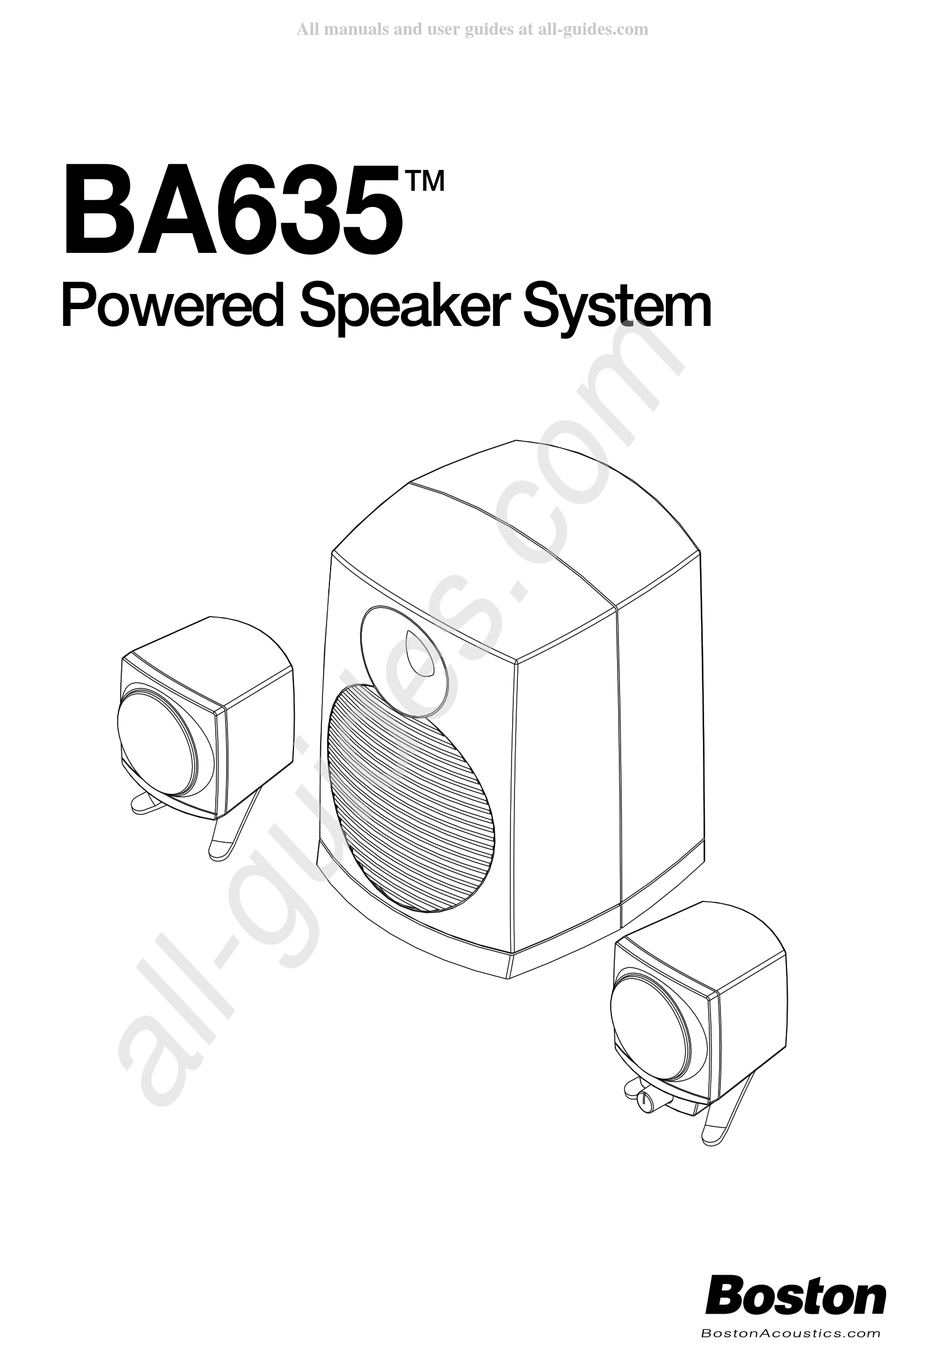 Specifications - Boston Acoustics BA635 Manual [Page 2] | ManualsLib